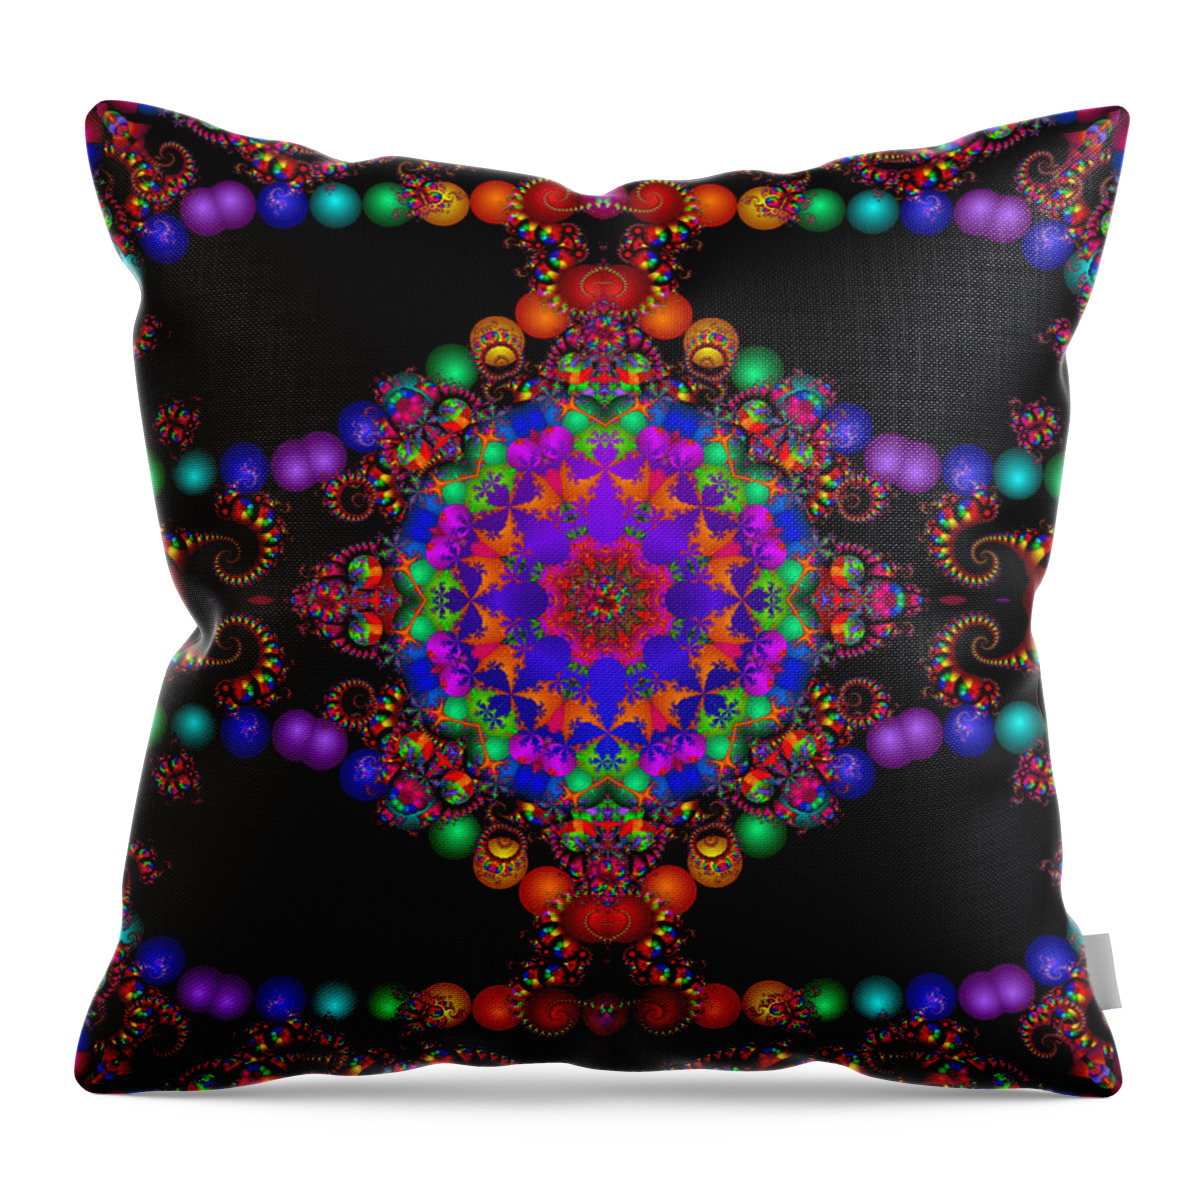 Colorful Throw Pillow featuring the digital art Dakota- by Robert Orinski